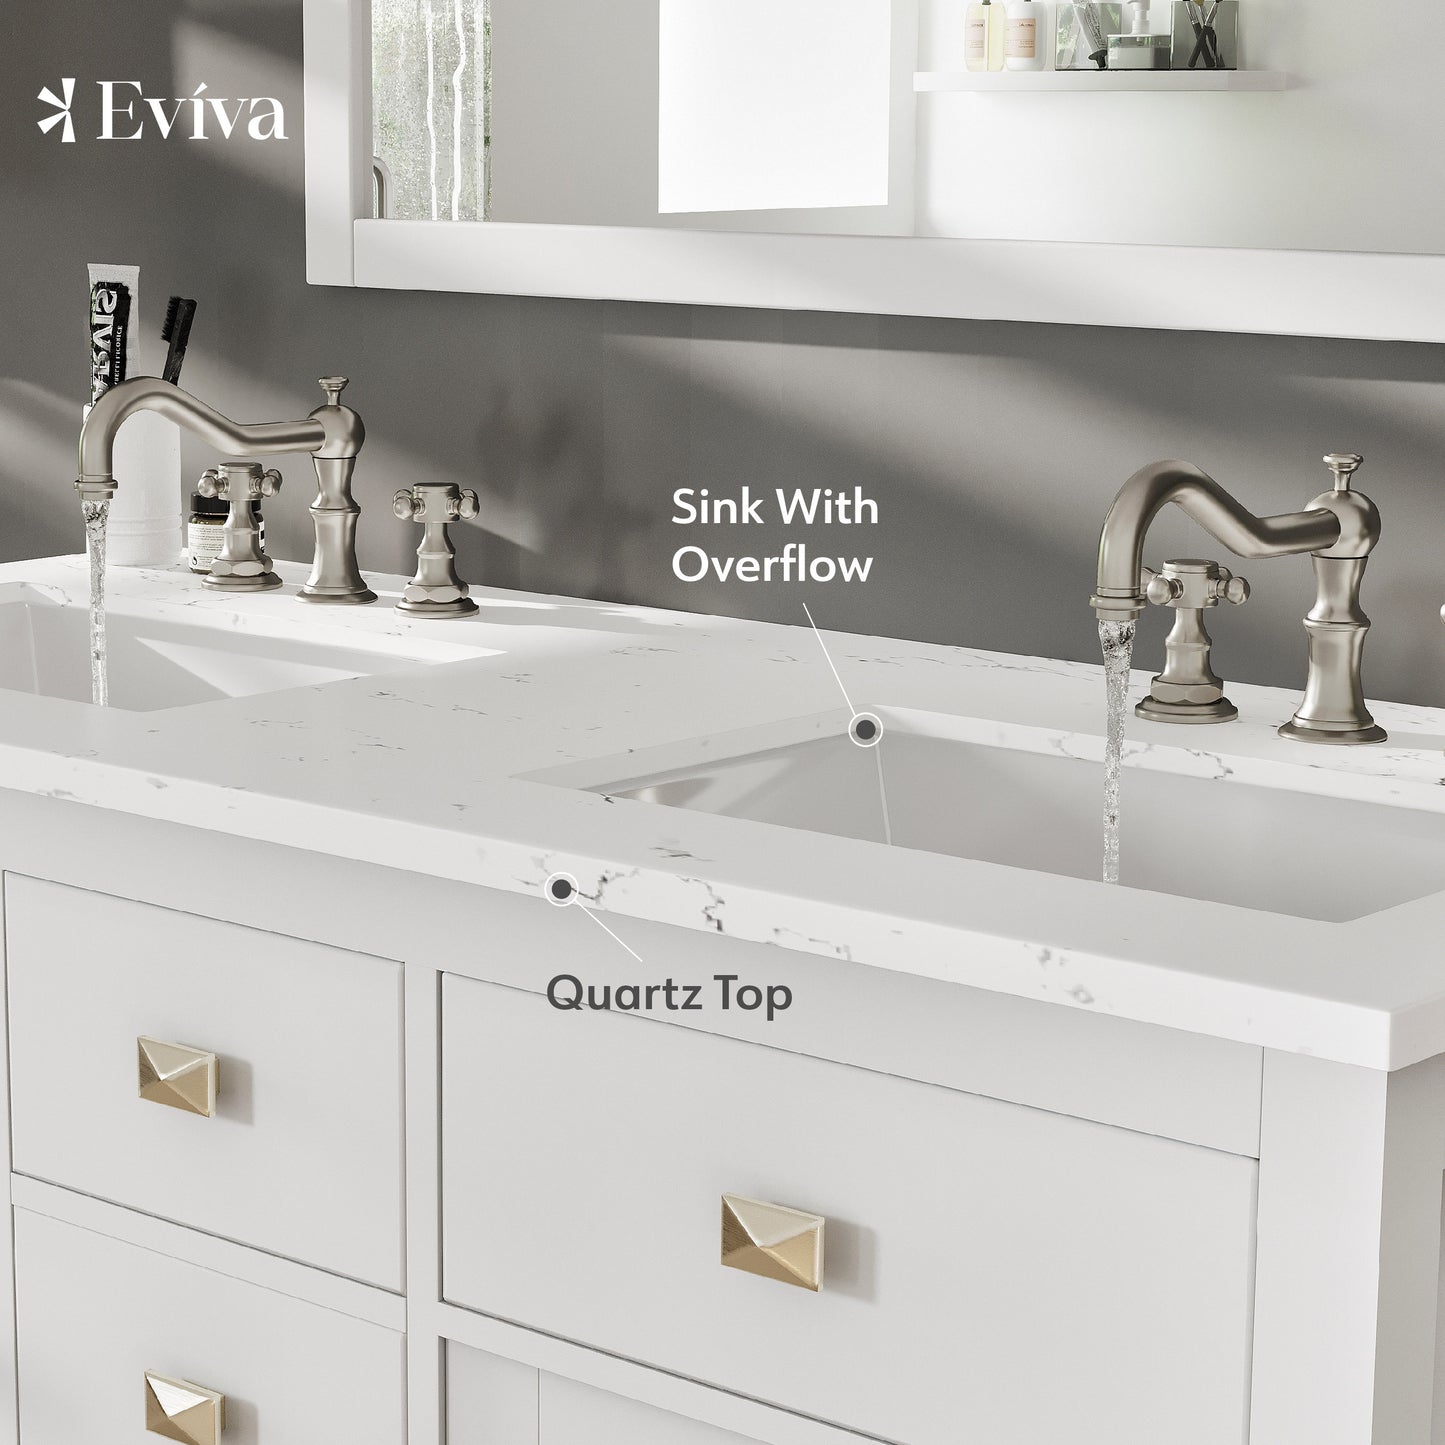 Artemis 48"W x 22"D White Double Sink Bathroom Vanity with Carrara Quartz Countertop and Undermount Porcelain Sink